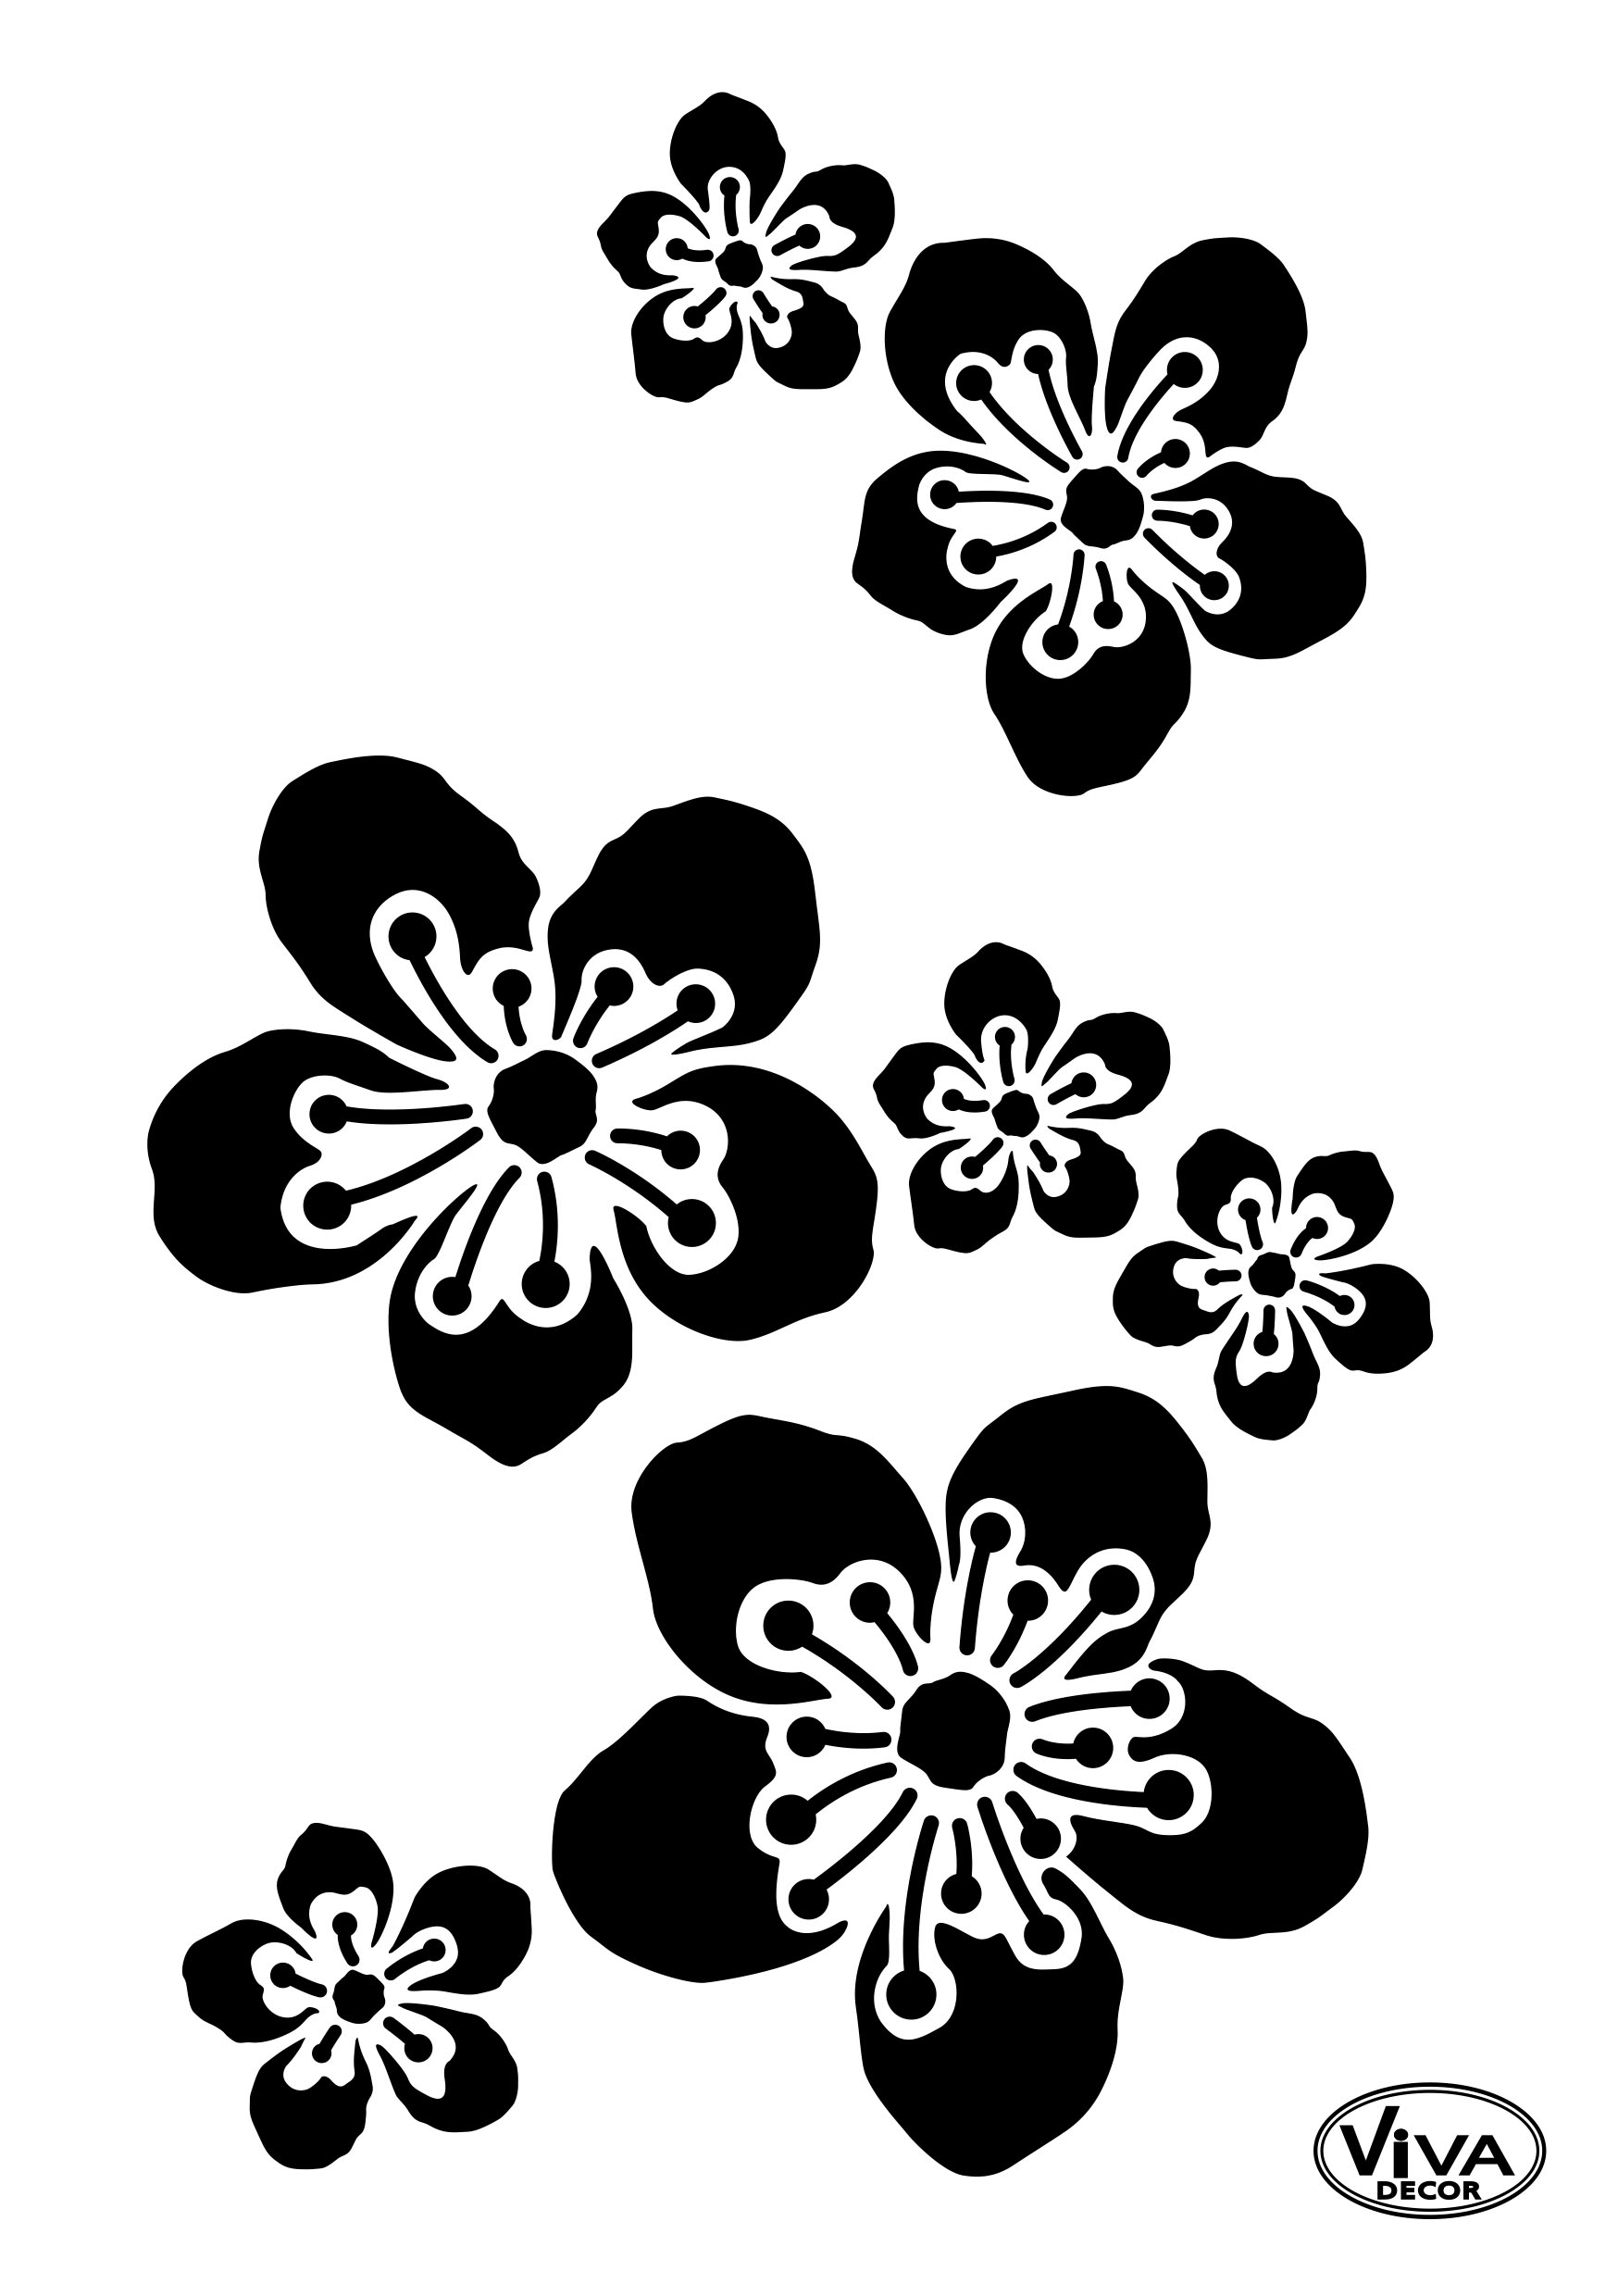 Universal-Schablone Kirschblüten A5 Cherry Blossoms Stencil